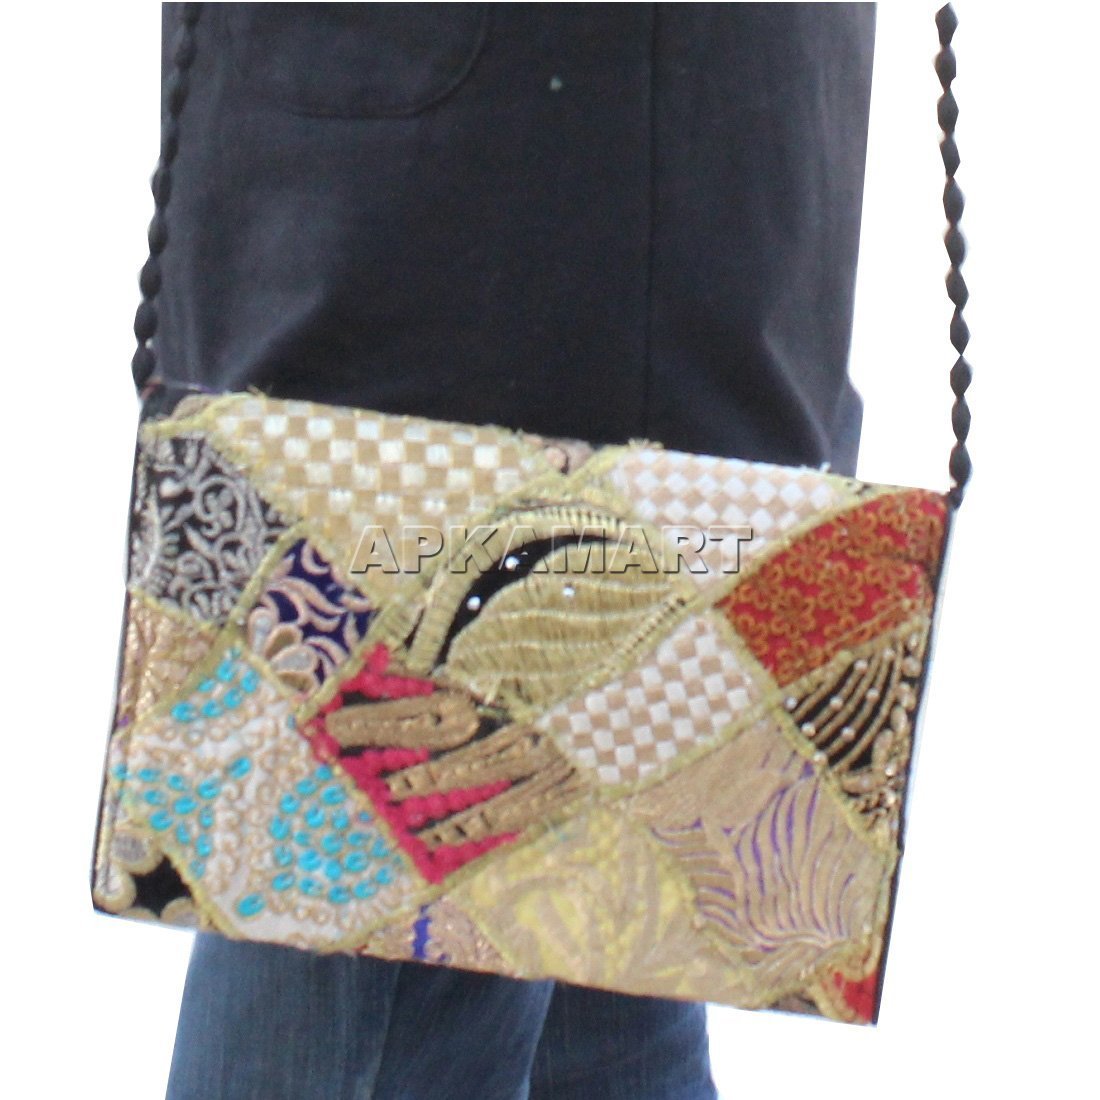 Suriya, a designer tote bag (Royal Blue)—Ltd. Ed. Mini tote bag.